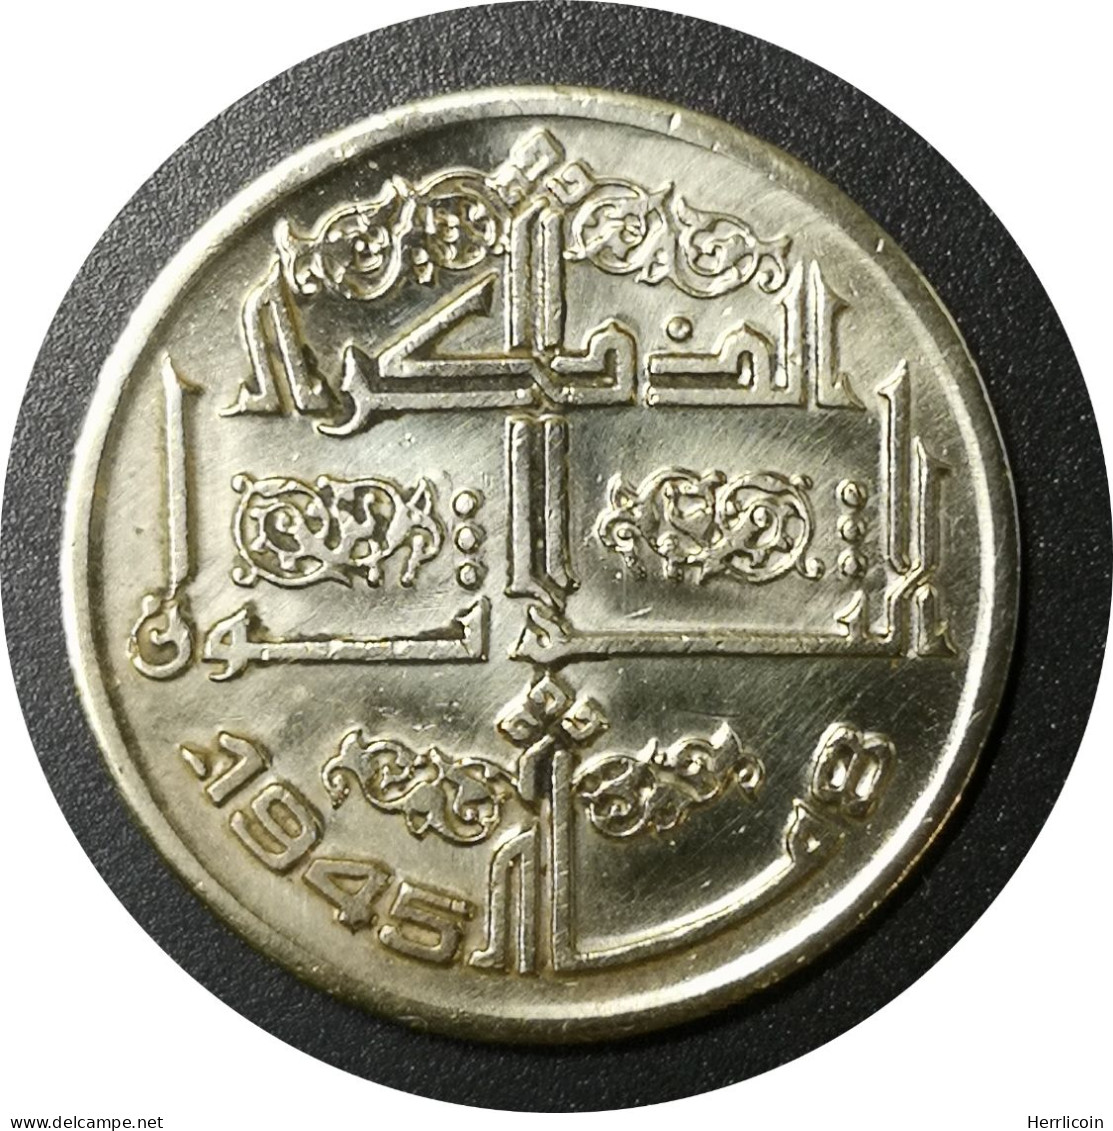 Monnaie Algérie - 1975 - 50 Centimes - Algeria